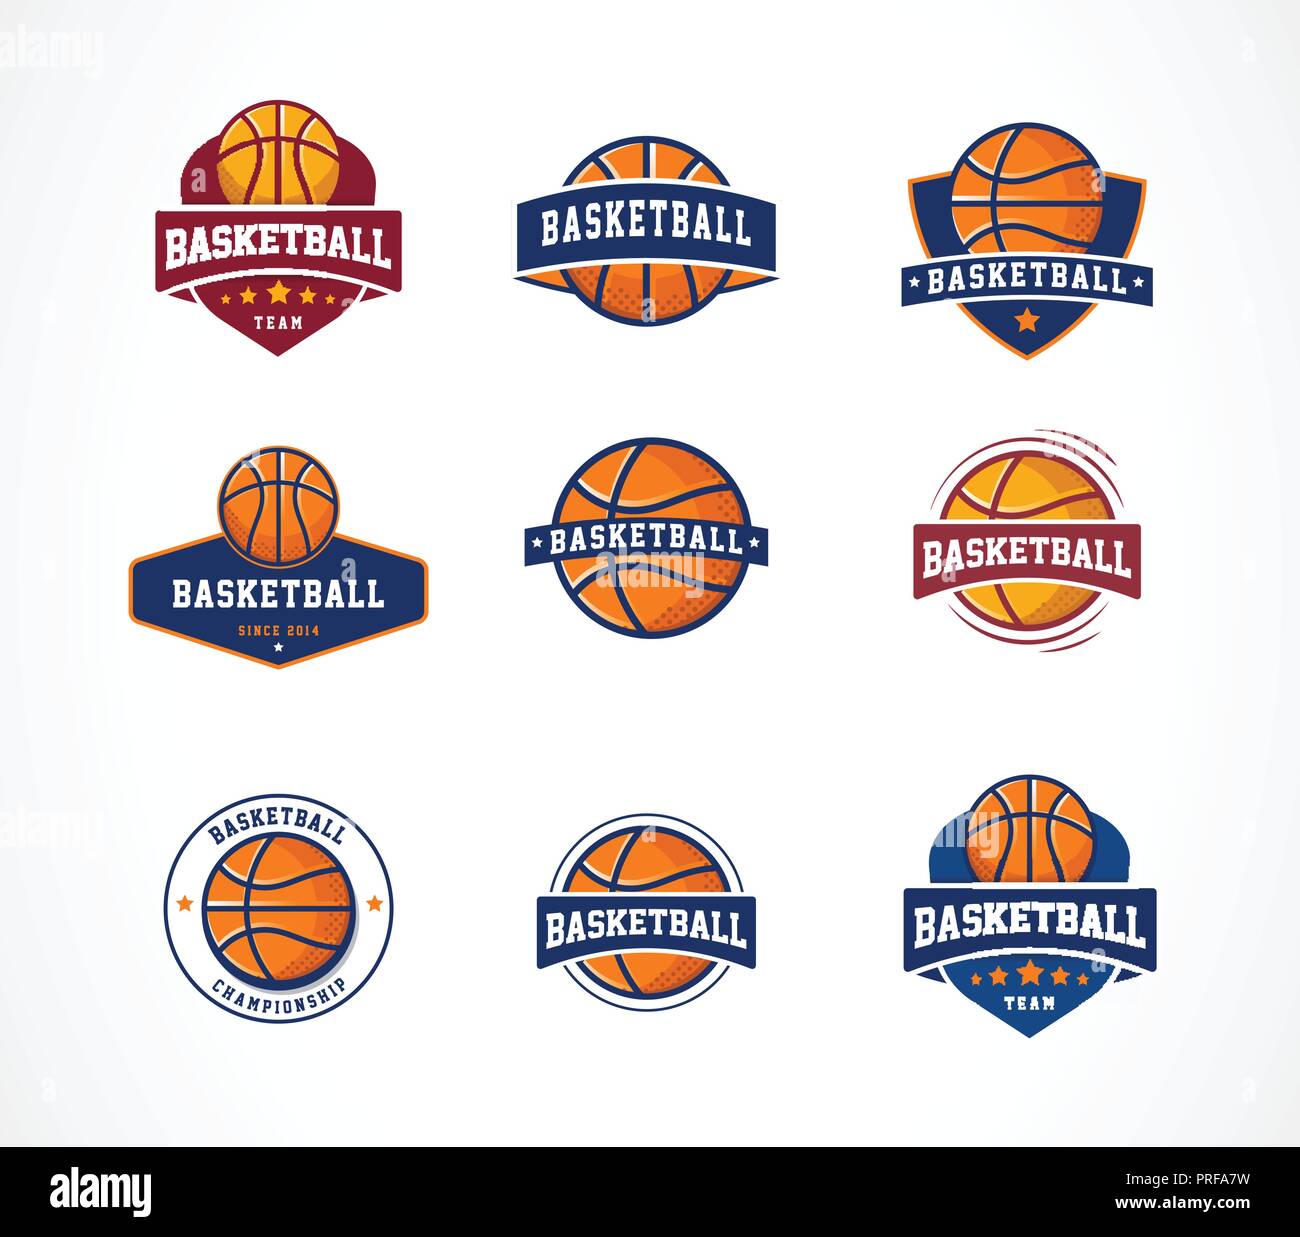 Basketball logo, emblem, icons collections, vector templates Stock Vector